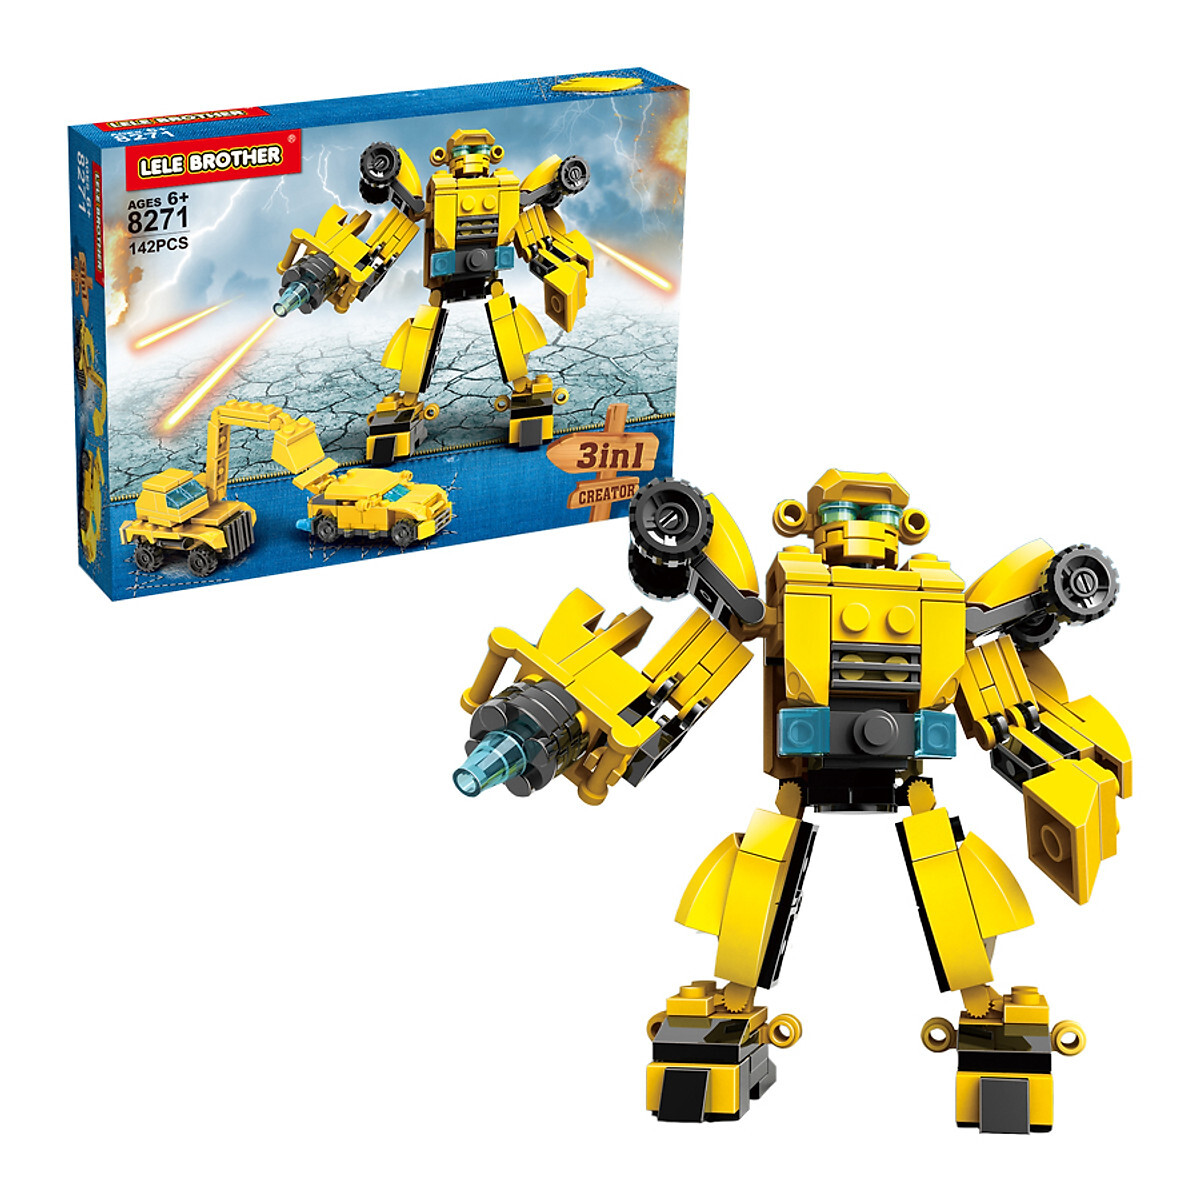 Đồ chơi Lắp Ráp Transformer Bumblebee Warrior Lele Brother 8271